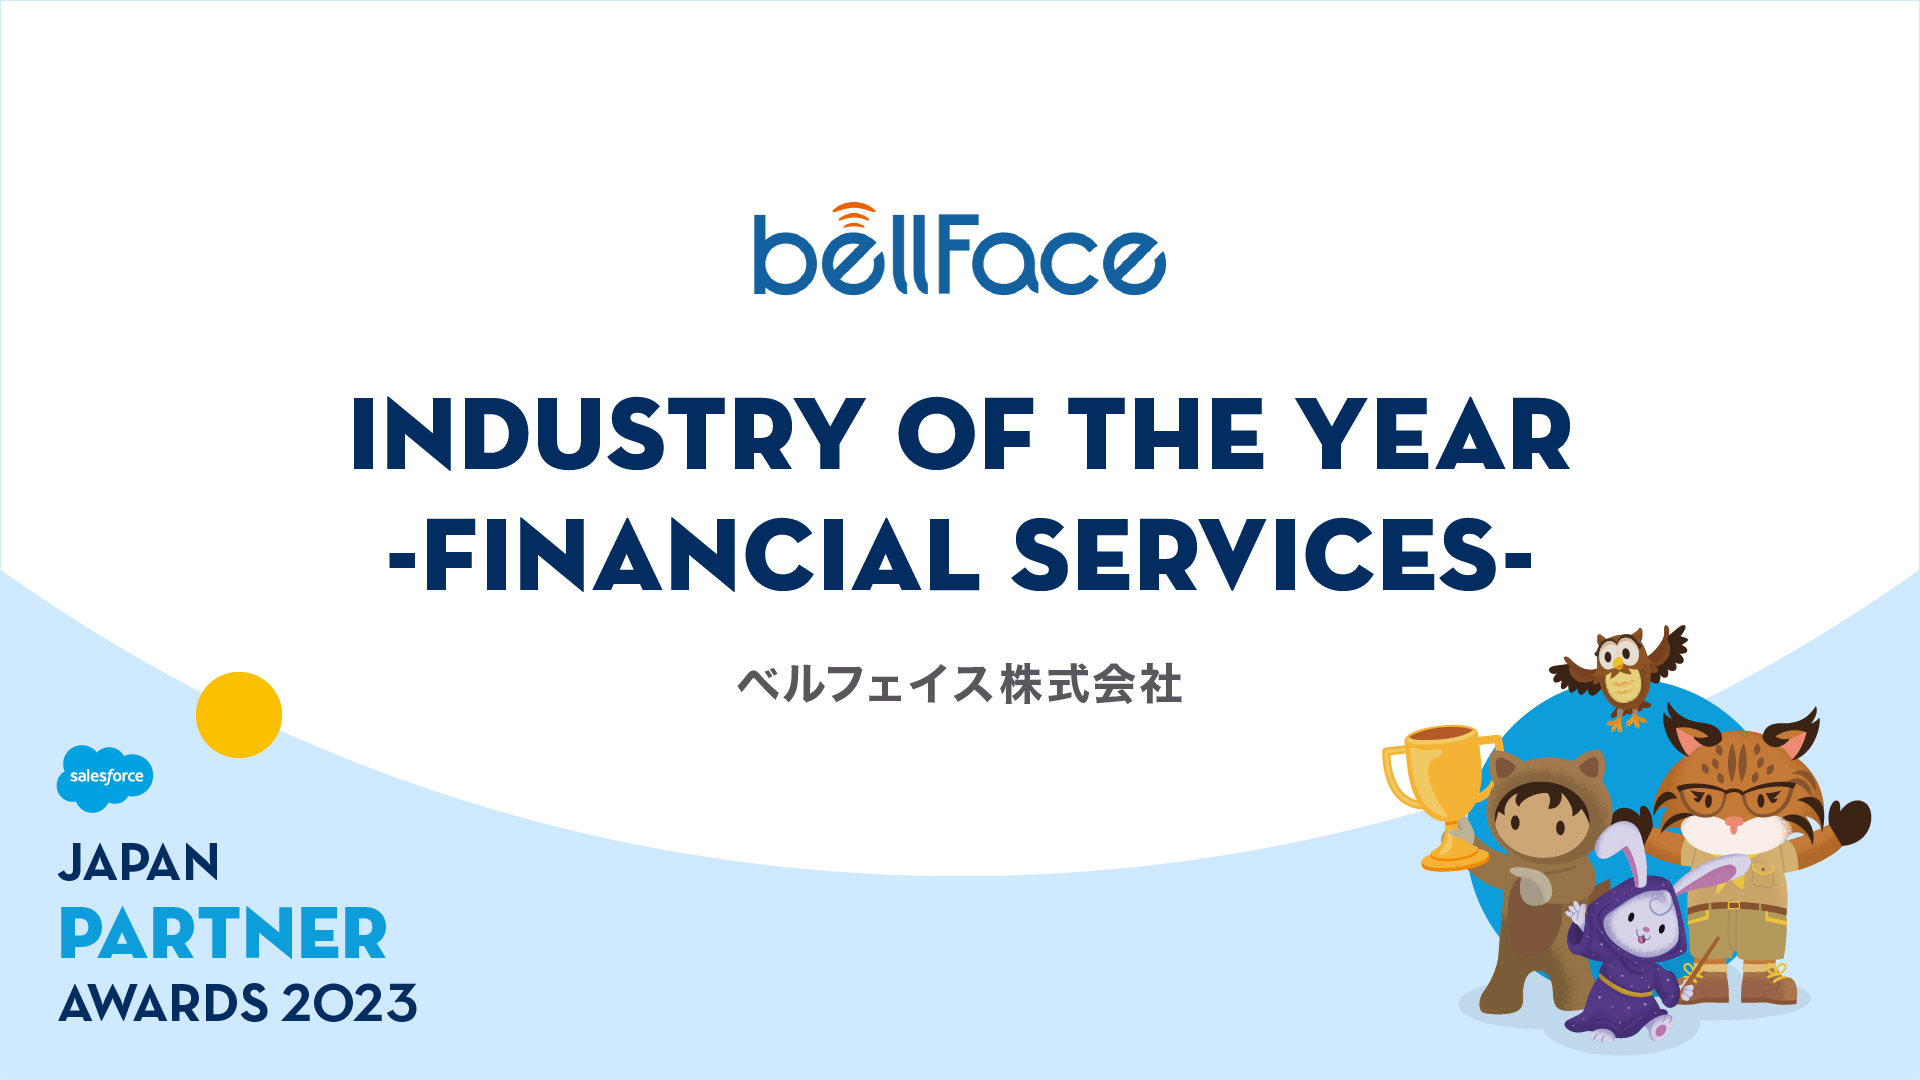 xtFCXASalesforce Japan Partner Award 2023܁@`Z@֌DXixɐś`